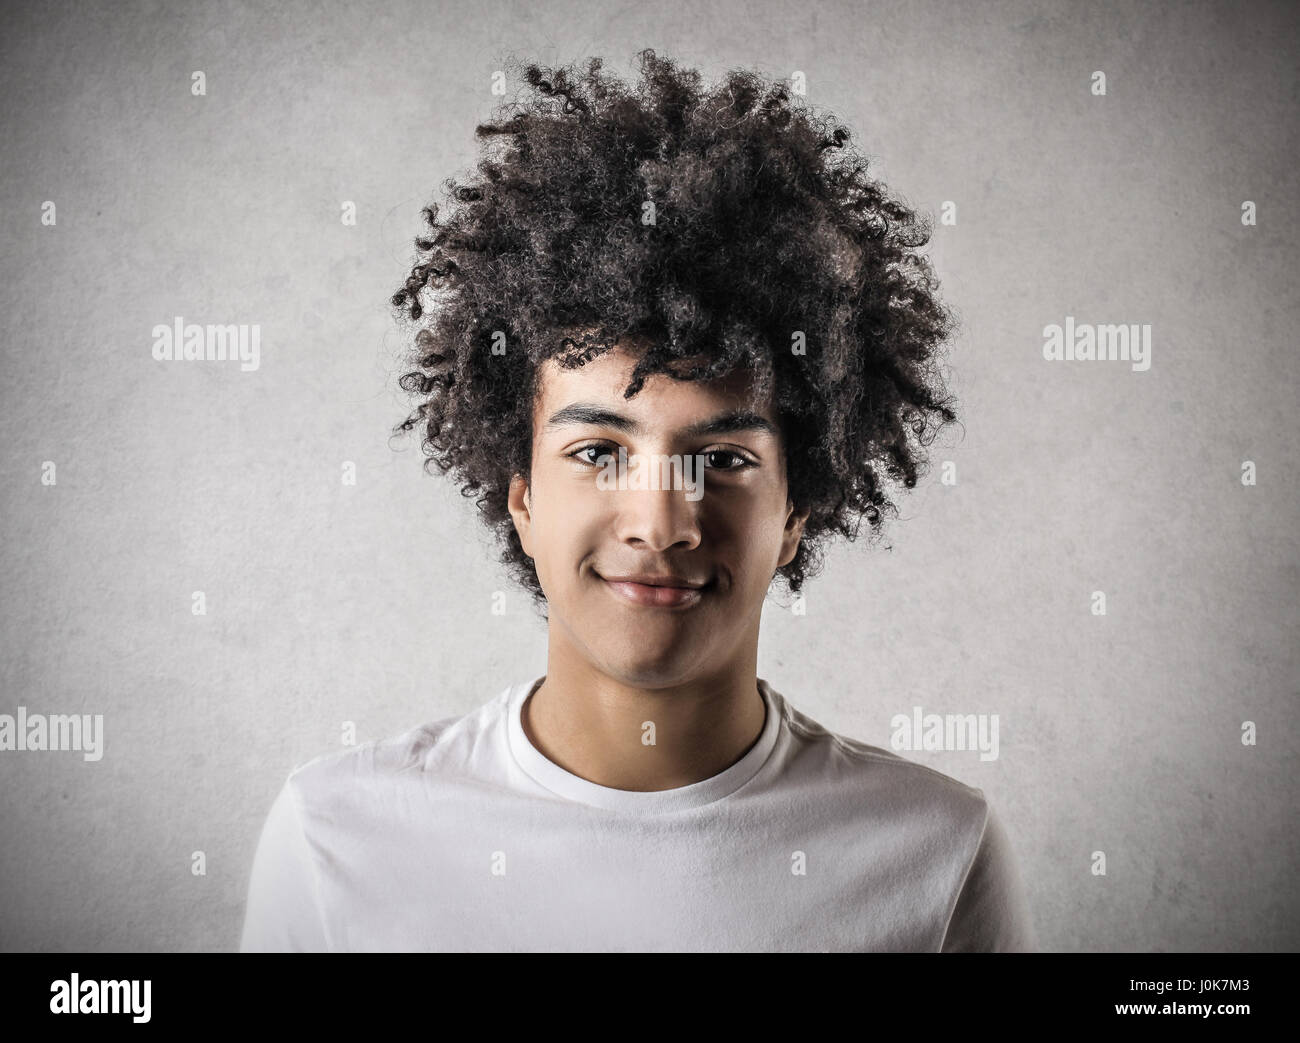 Young man's portrait Stock Photo